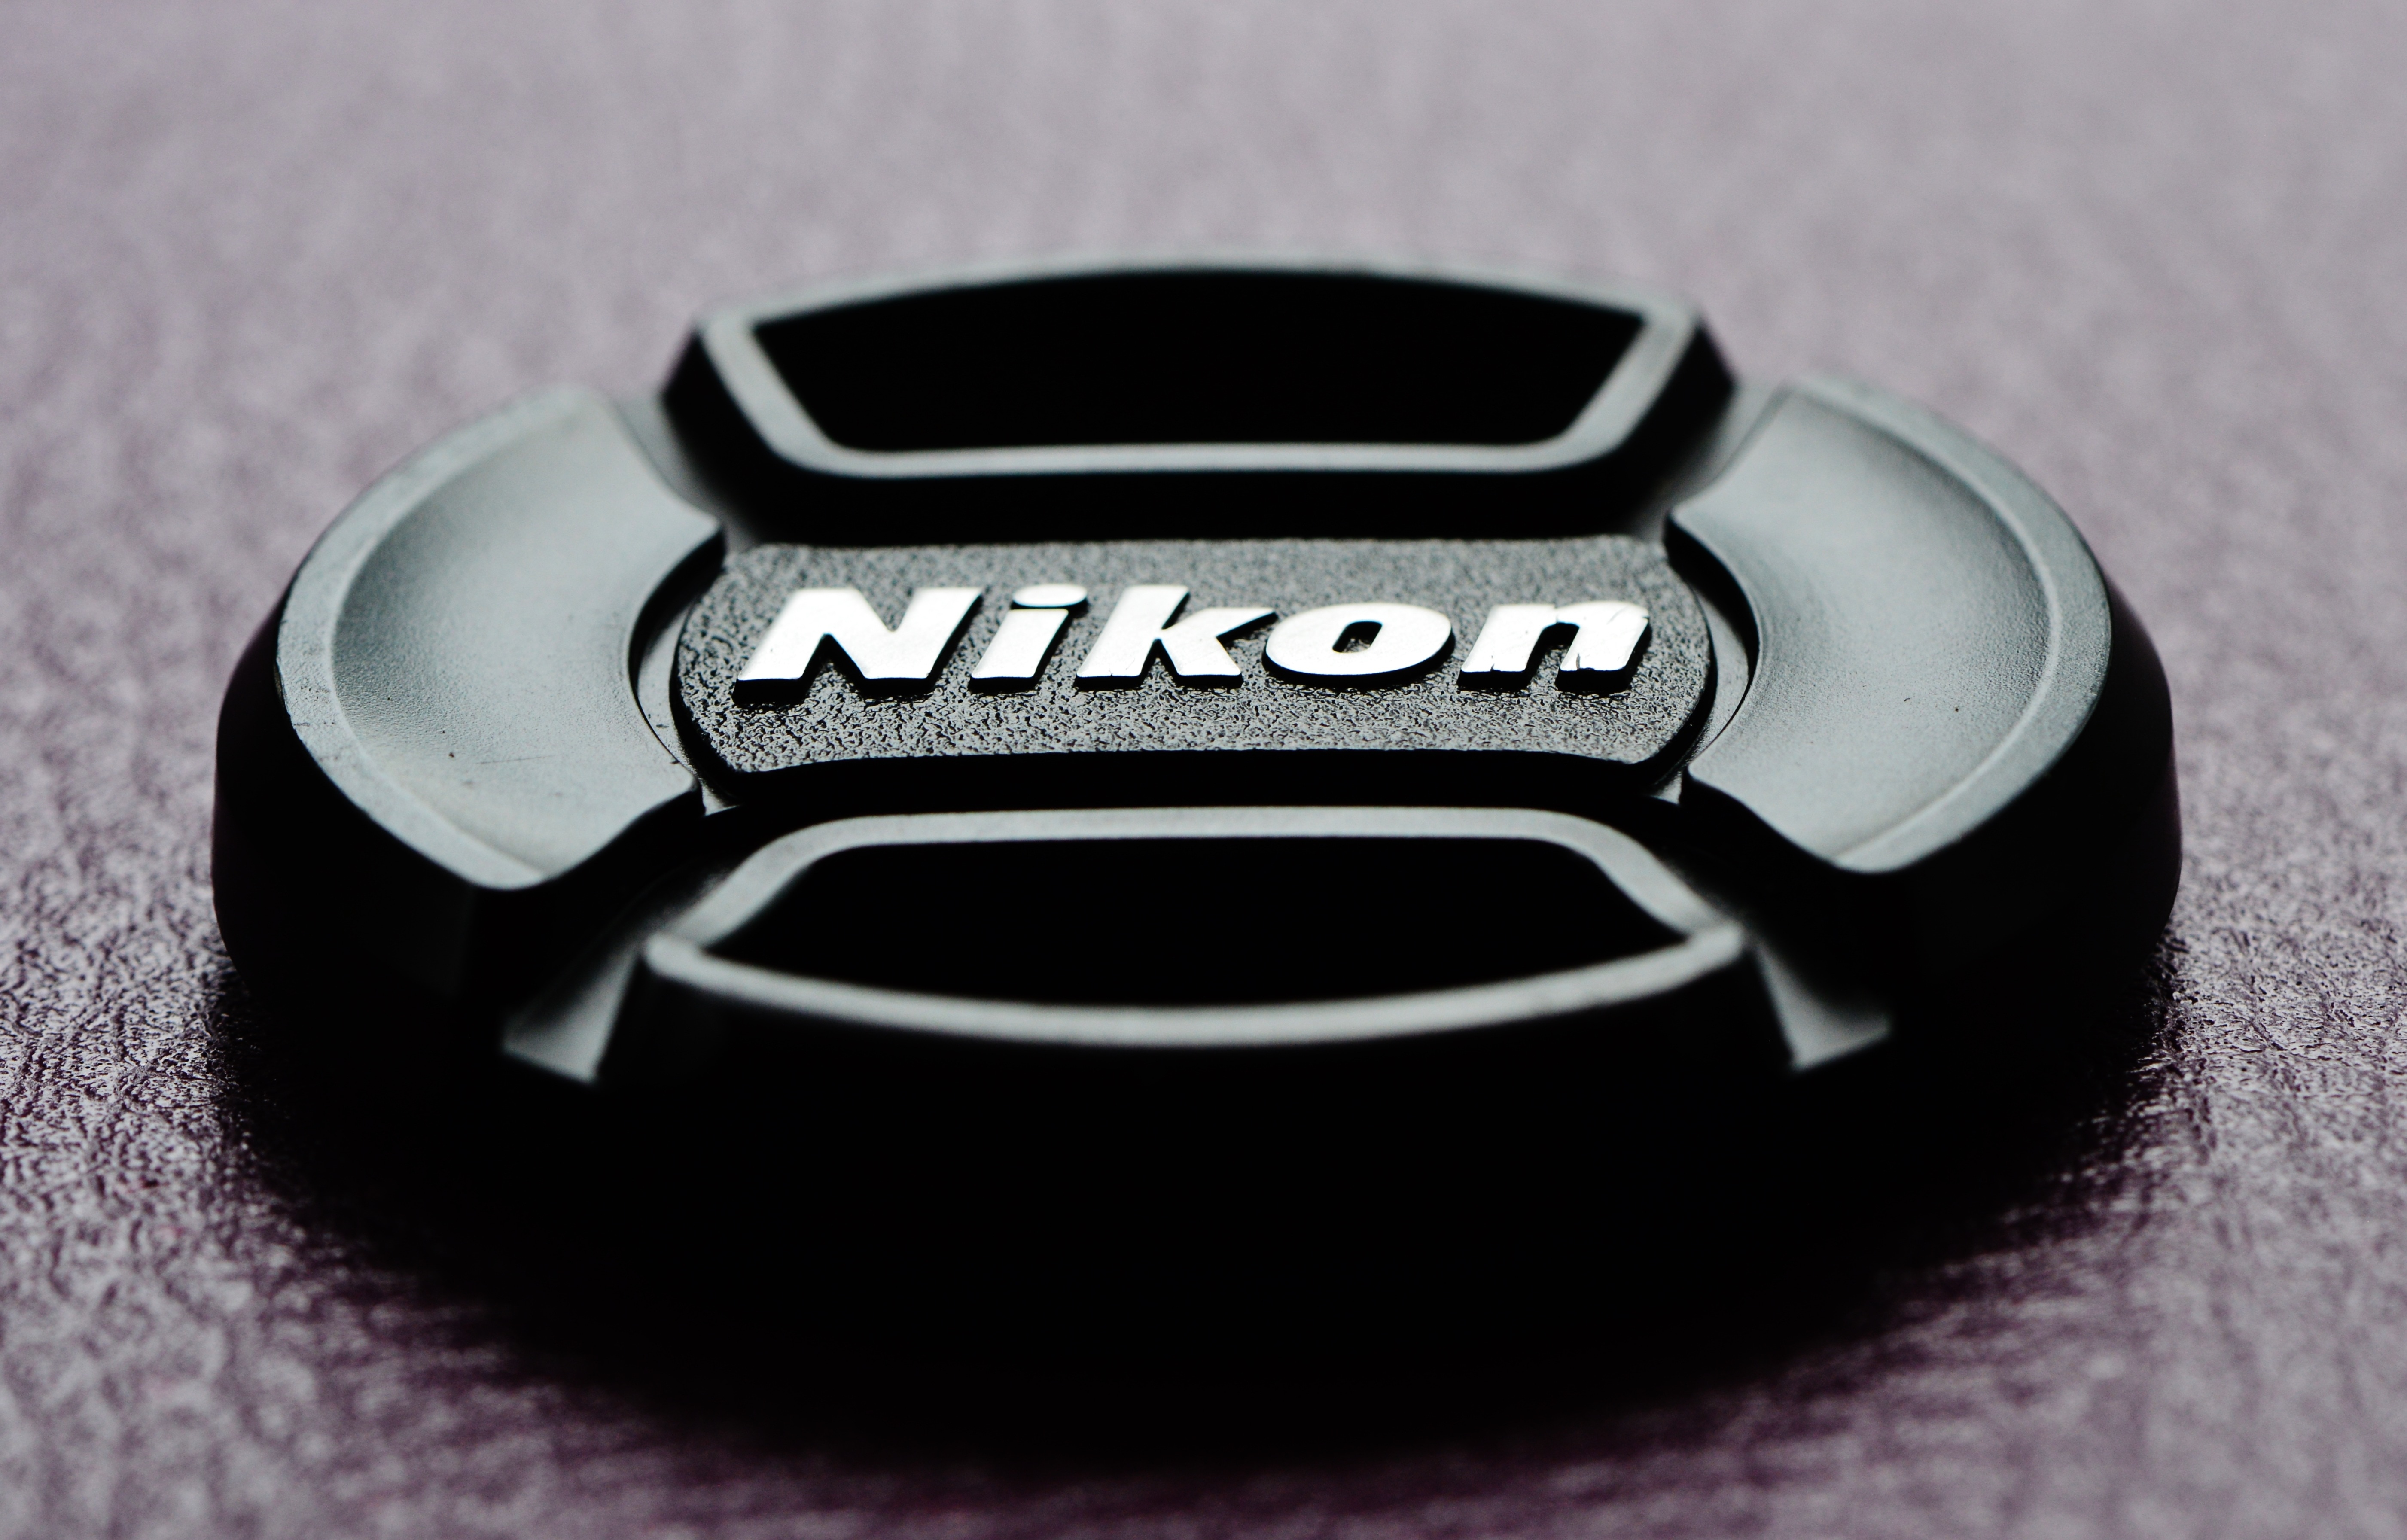 Nikon lens cover on grey surface